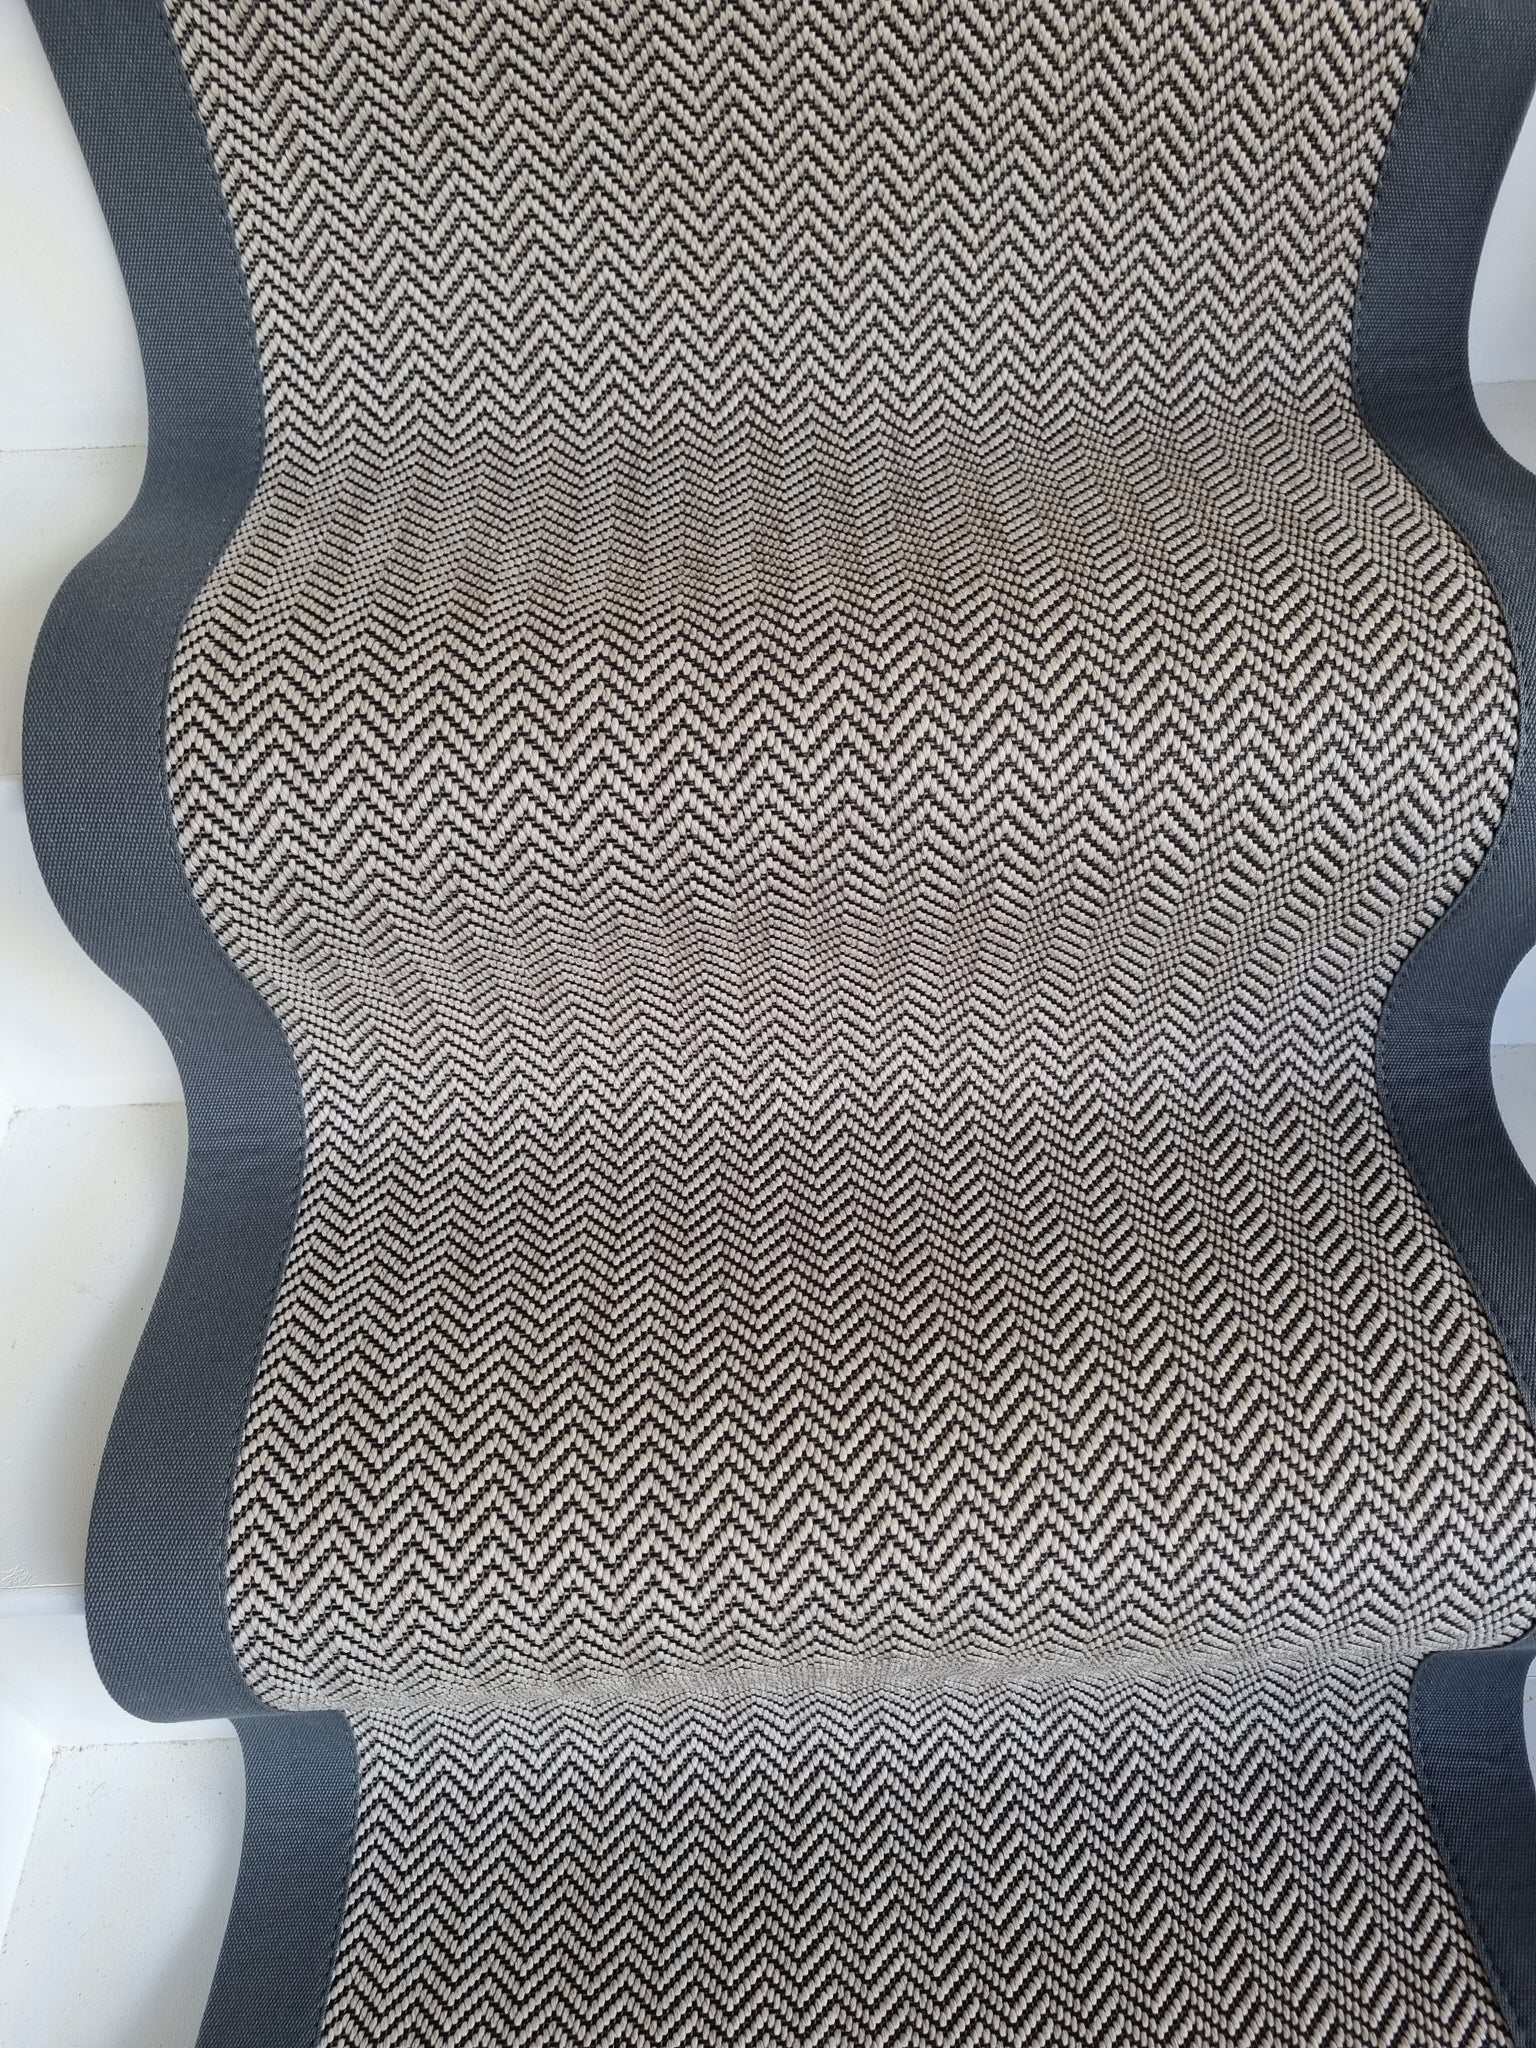 Black & White Herringbone Faux Sisal Carpet Stair Runner Gun Metal Grey Cotton border